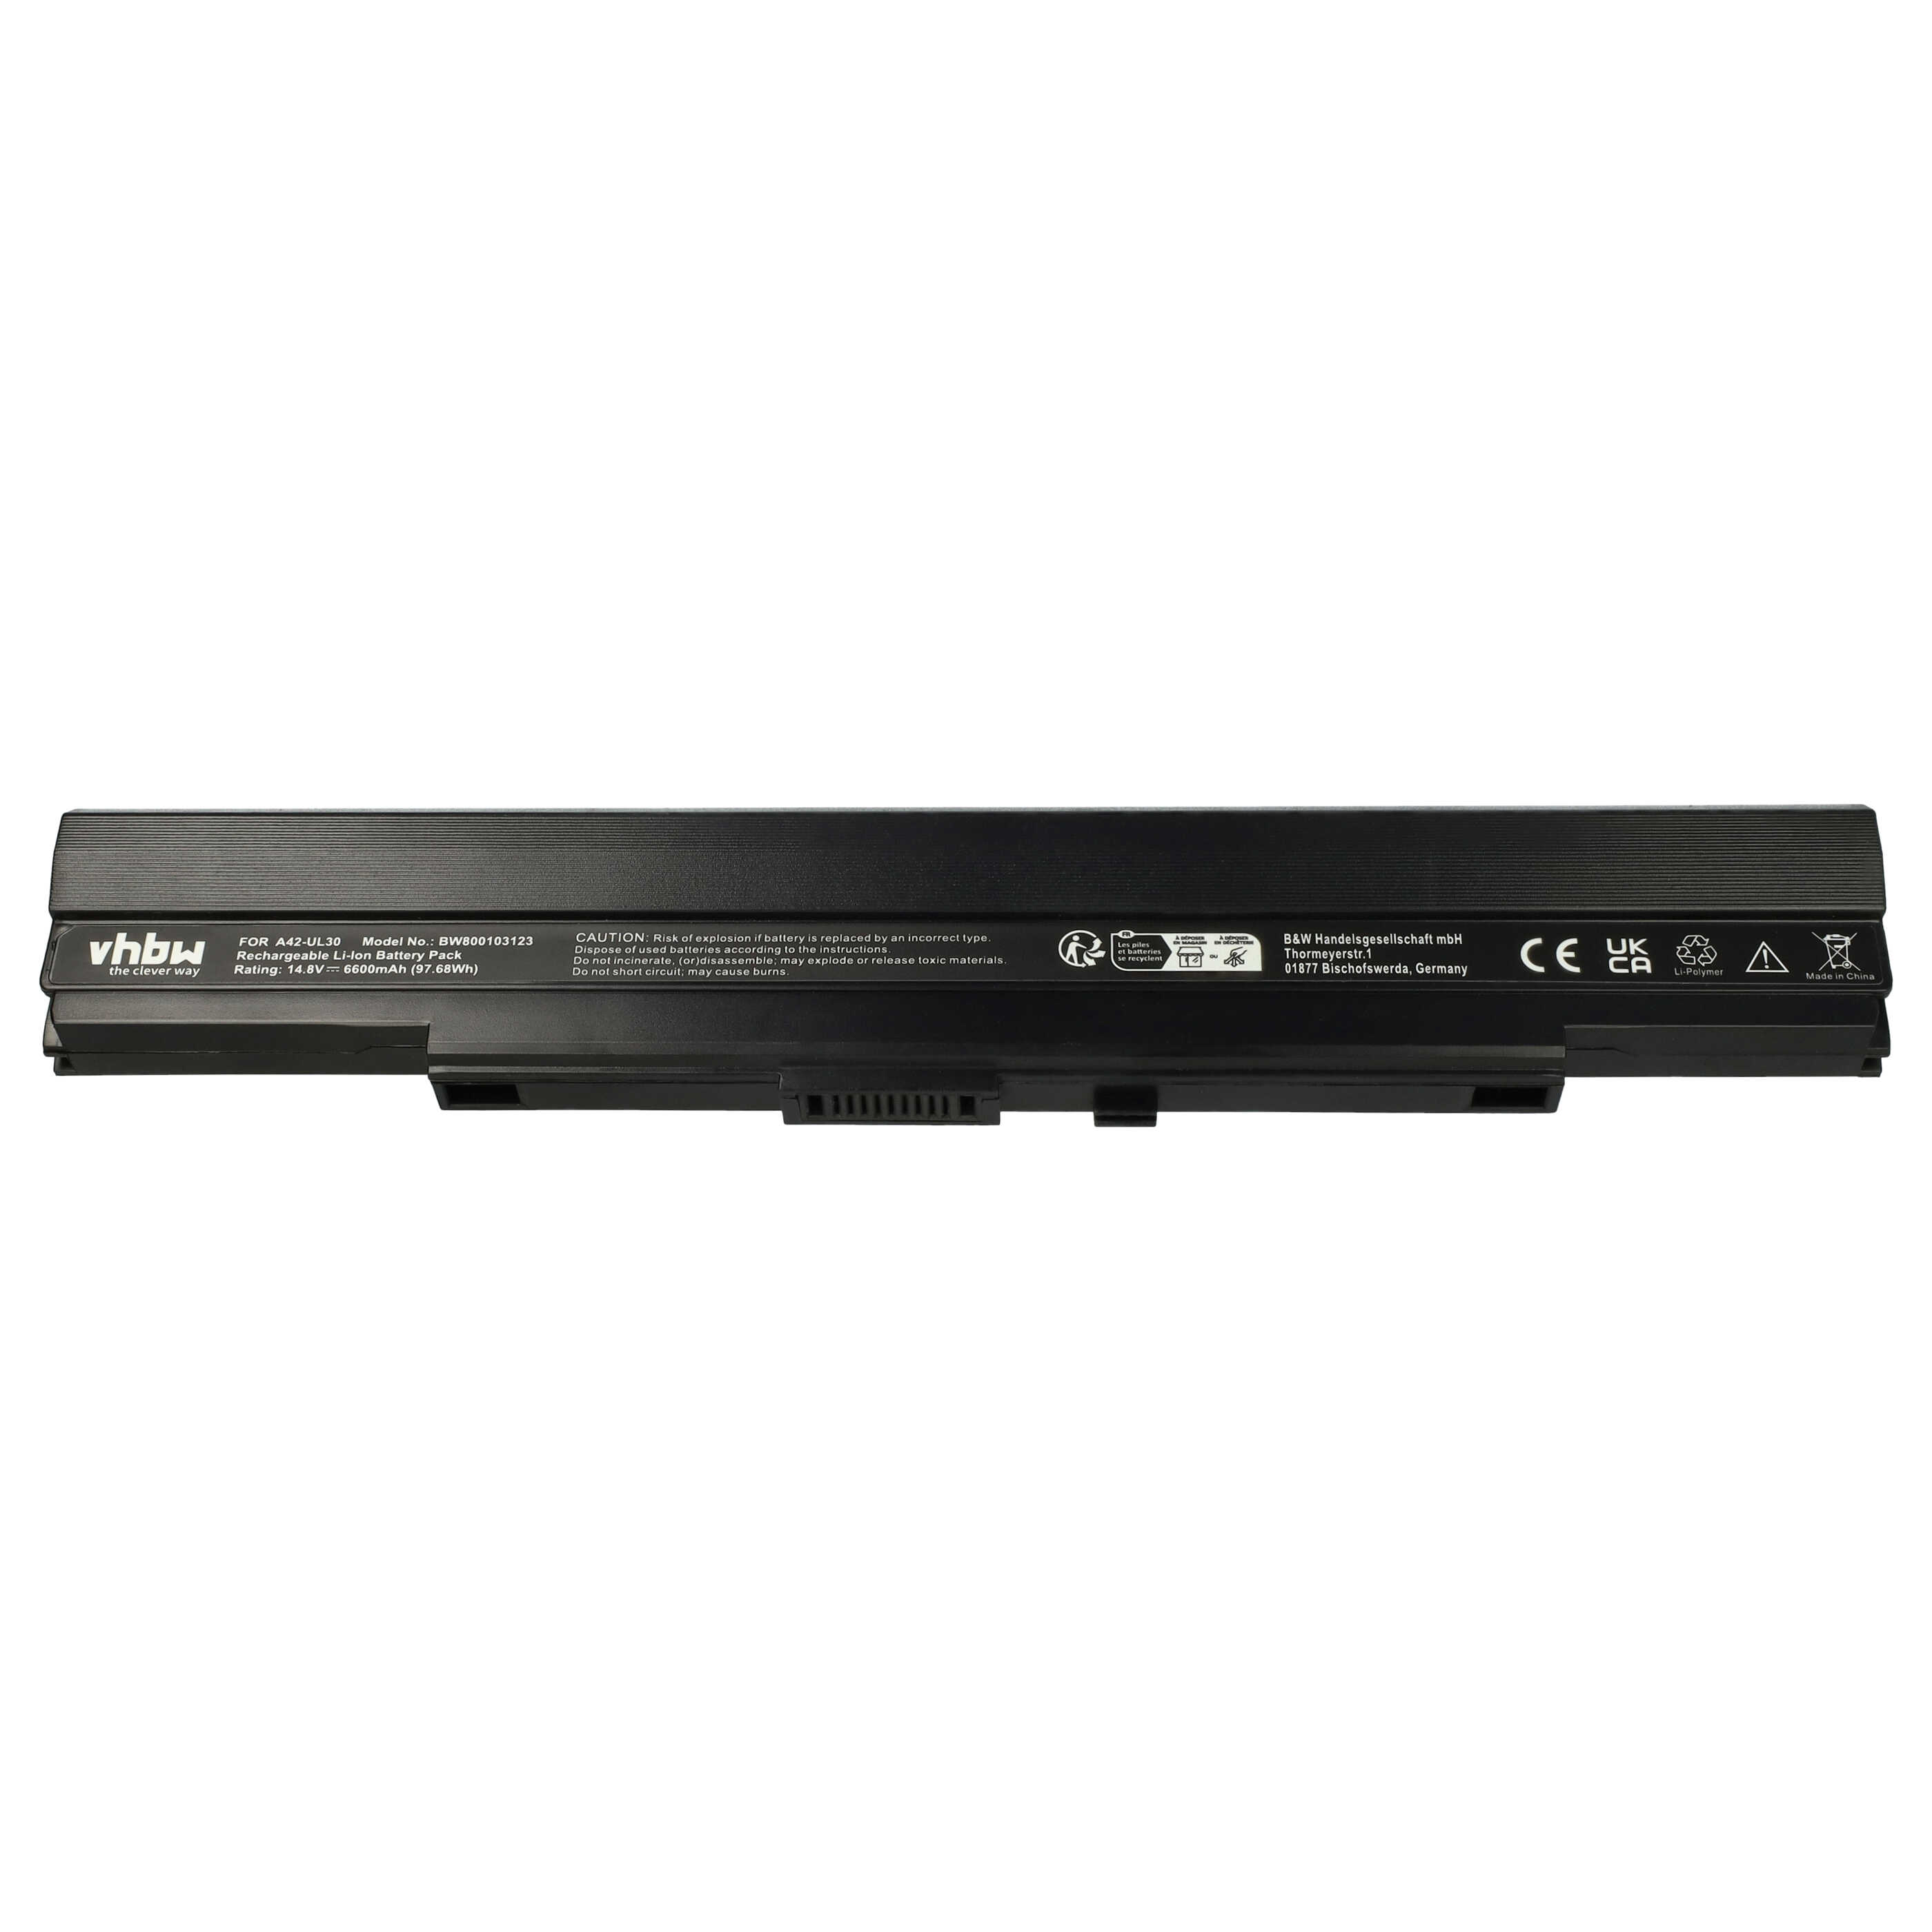 Akumulator do laptopa zamiennik Asus A42-UL50, A42-UL30, A42-UL80, A31-UL30 - 6600 mAh 14,8 V Li-Ion, czarny